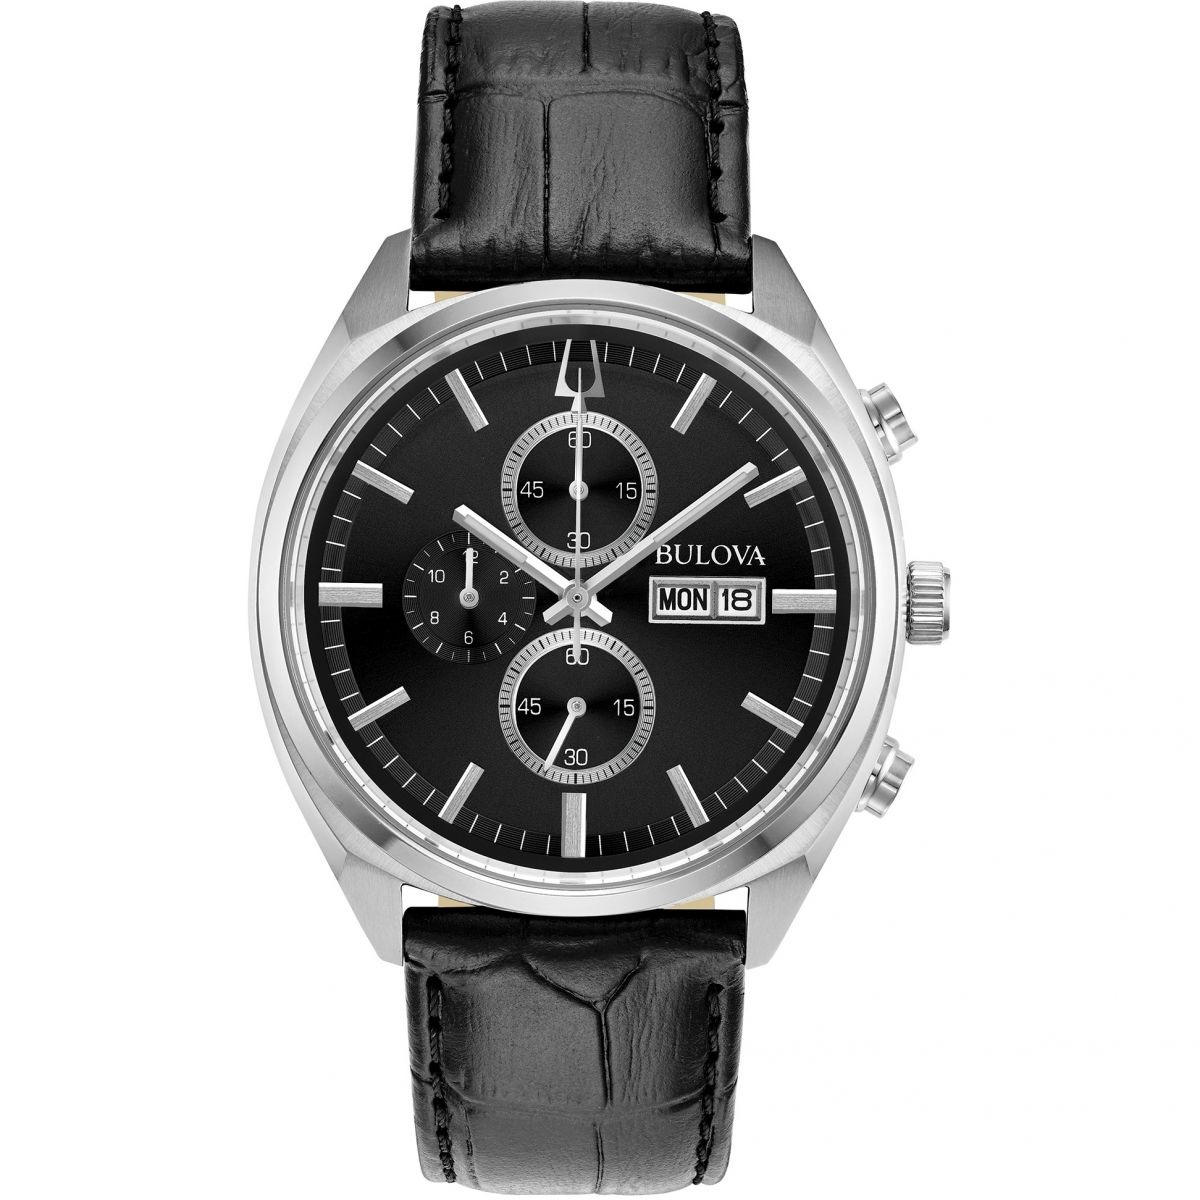 Gents Chronograph Watch in Black - Watch Shop GOOFASH